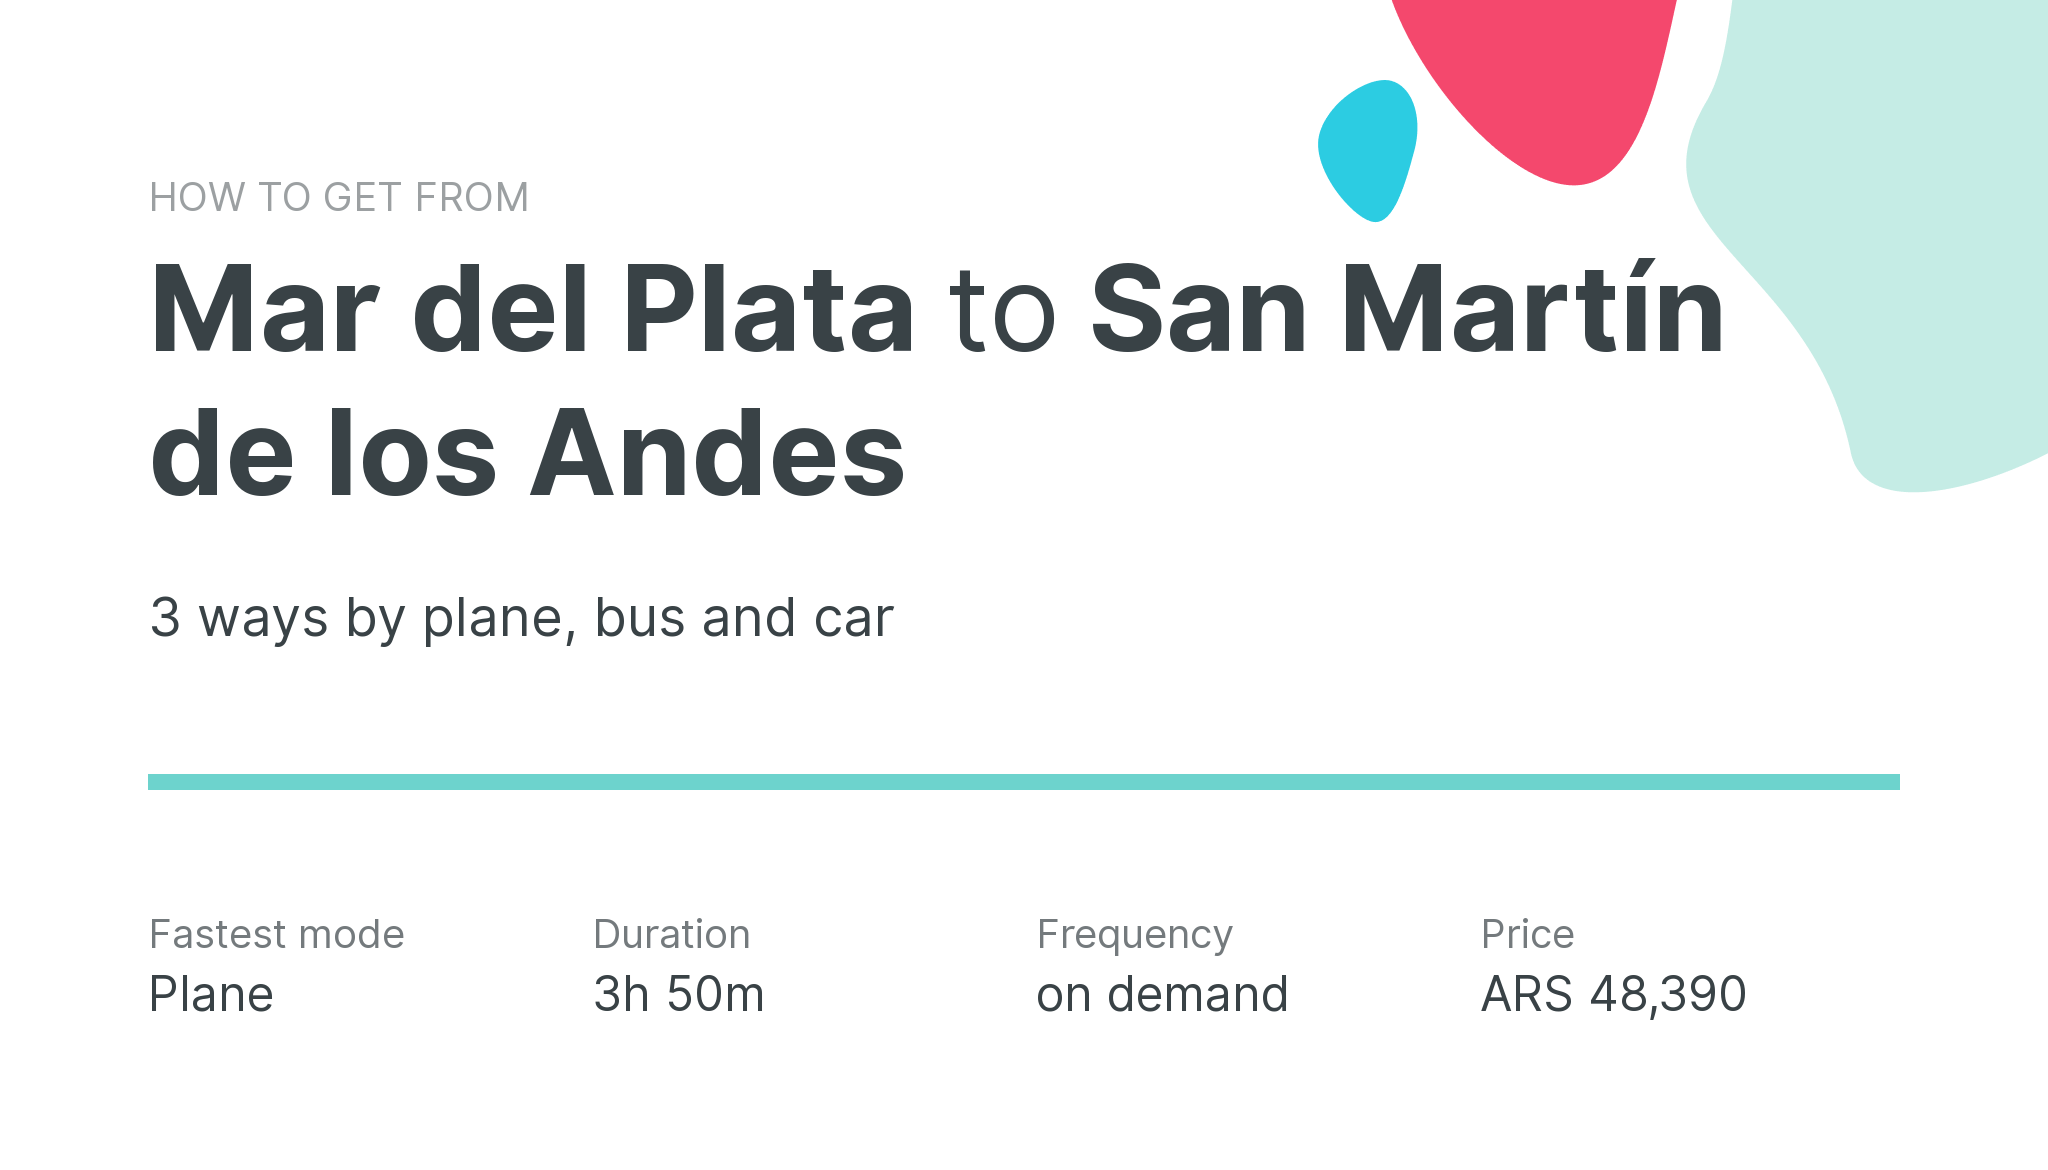 How do I get from Mar del Plata to San Martín de los Andes